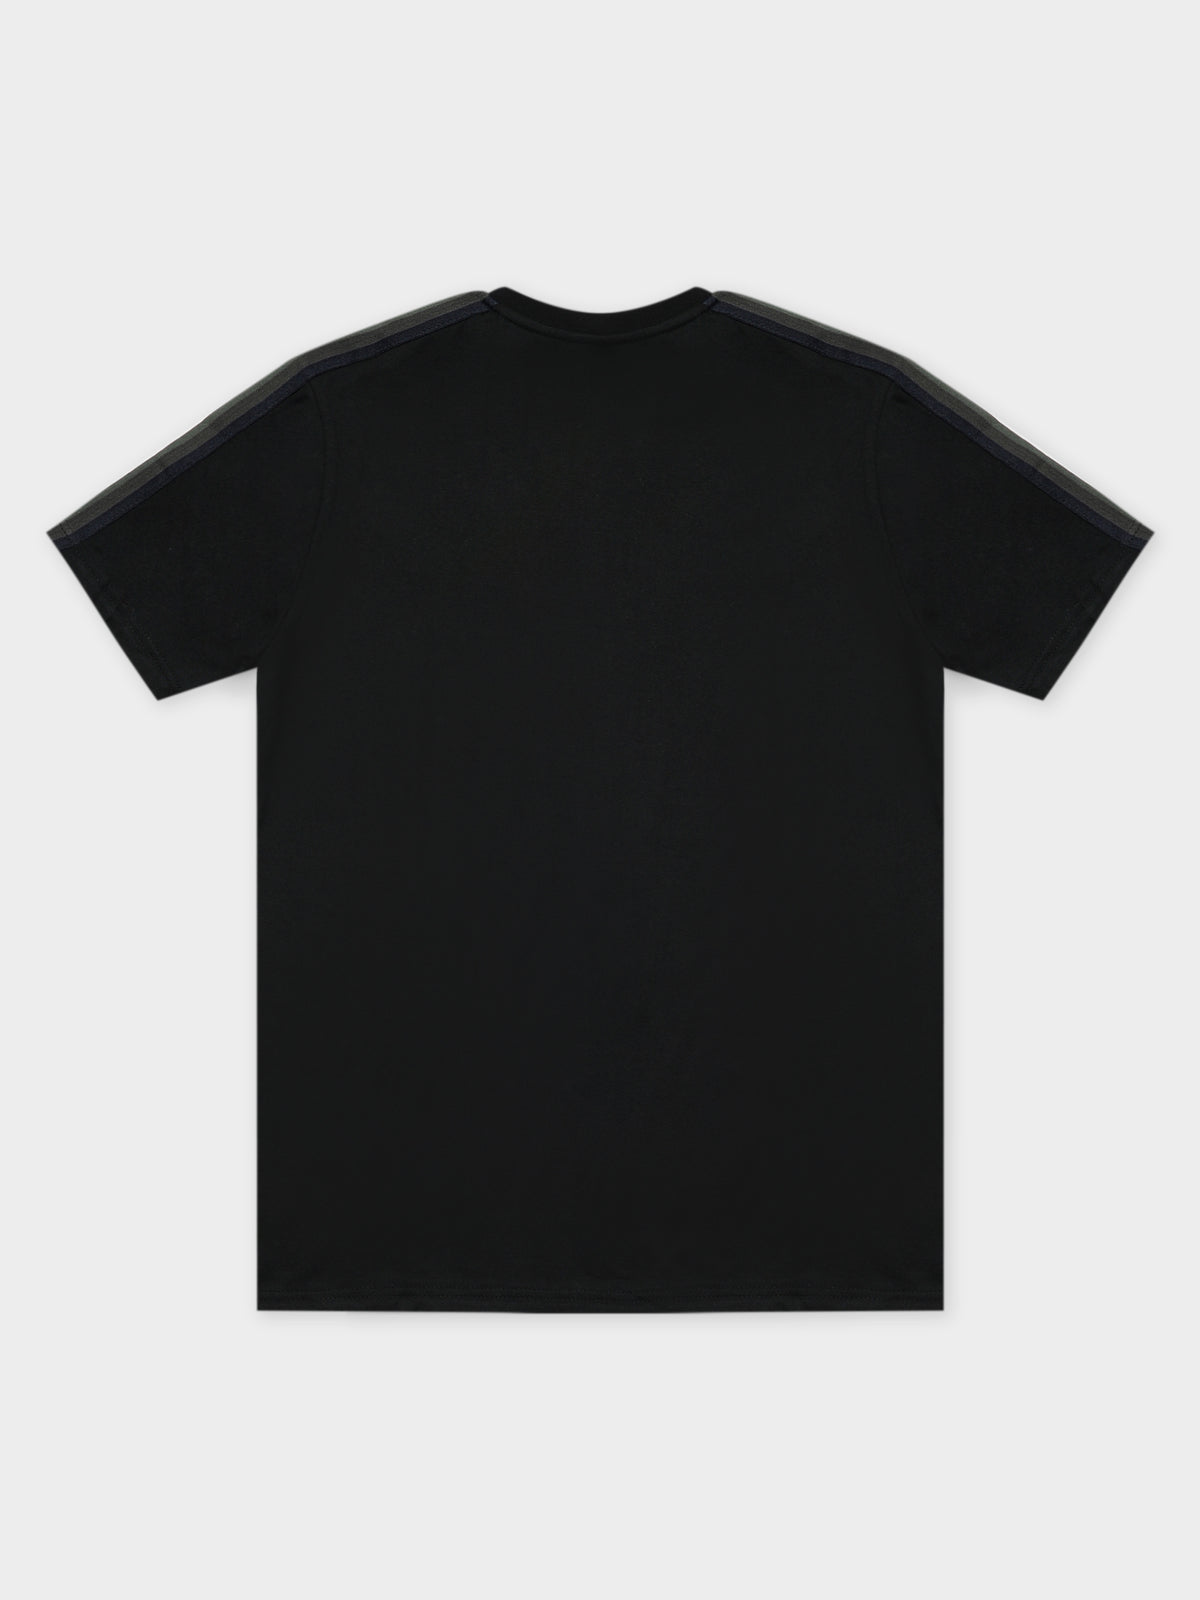 La Versa T-Shirt in Black